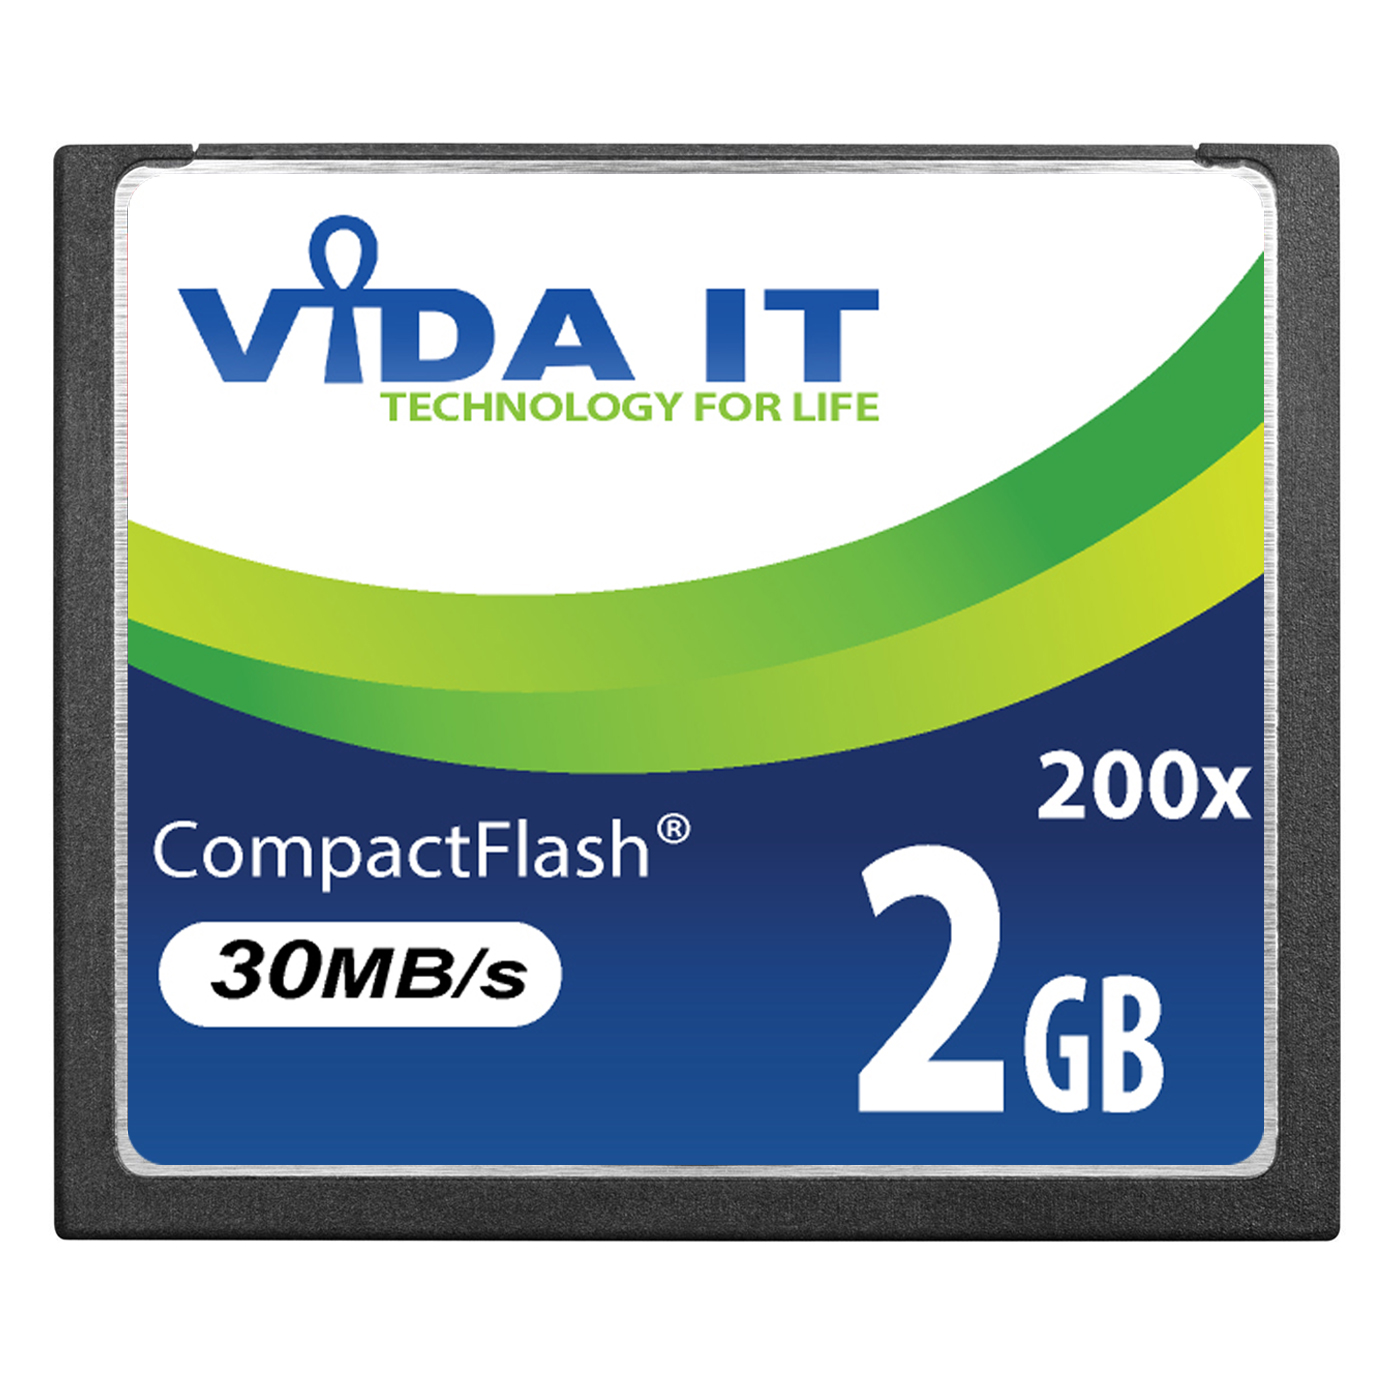 Vida IT® 2GB CF Compact Flash Memory Card High Speed 200X 30MB/s for SLR Digital Camera